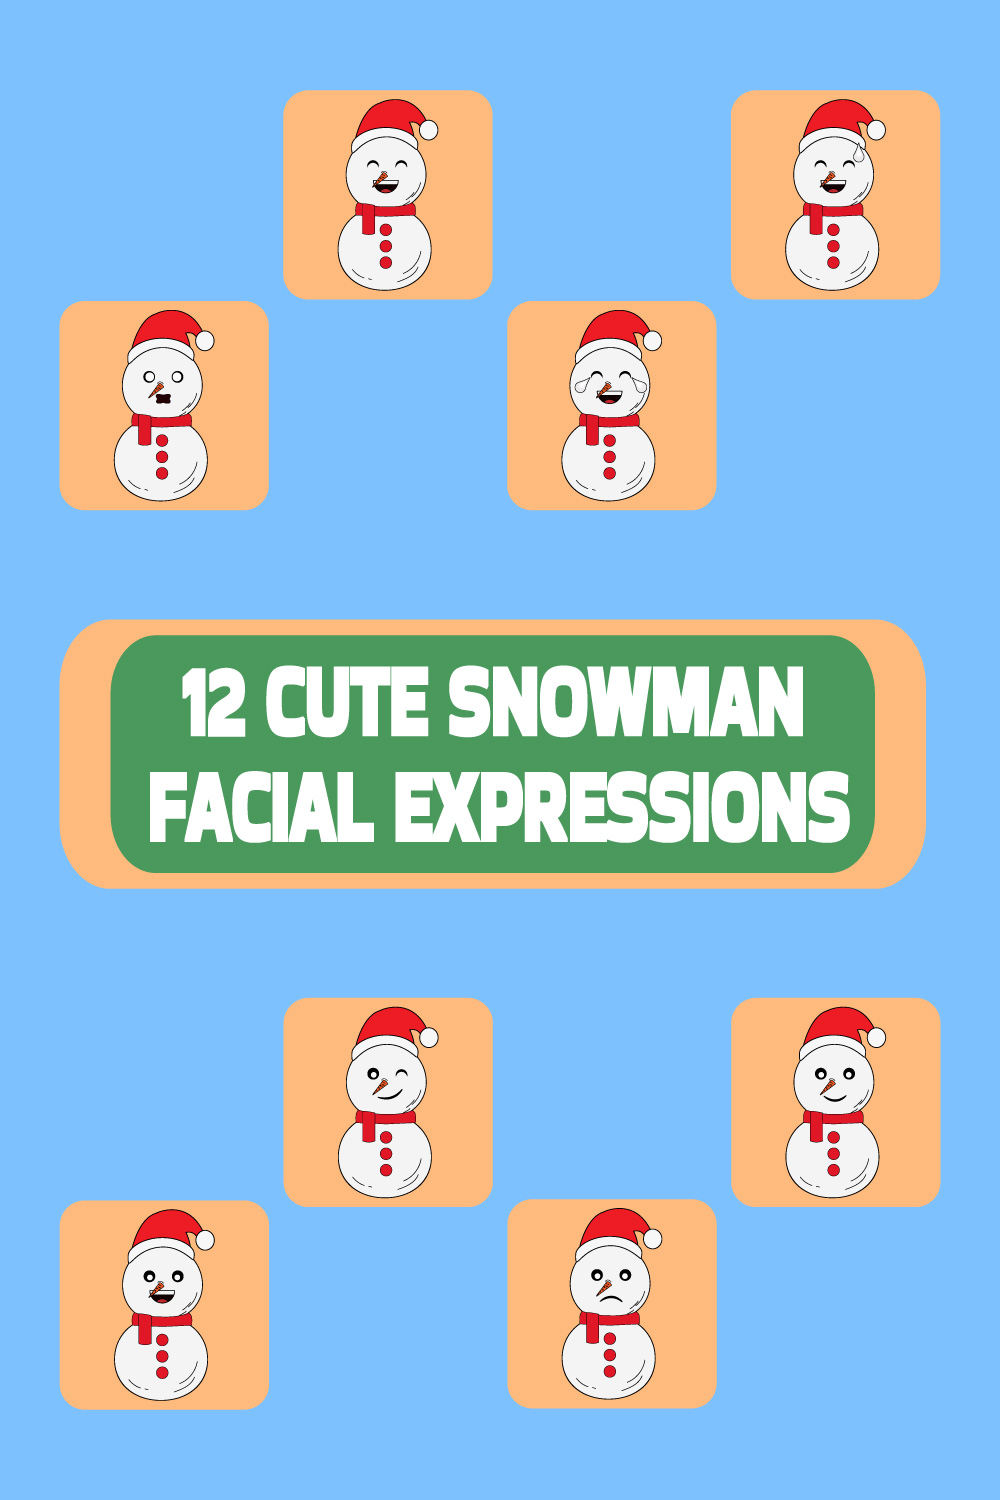 12 Cute Snowman Facial Expressions.